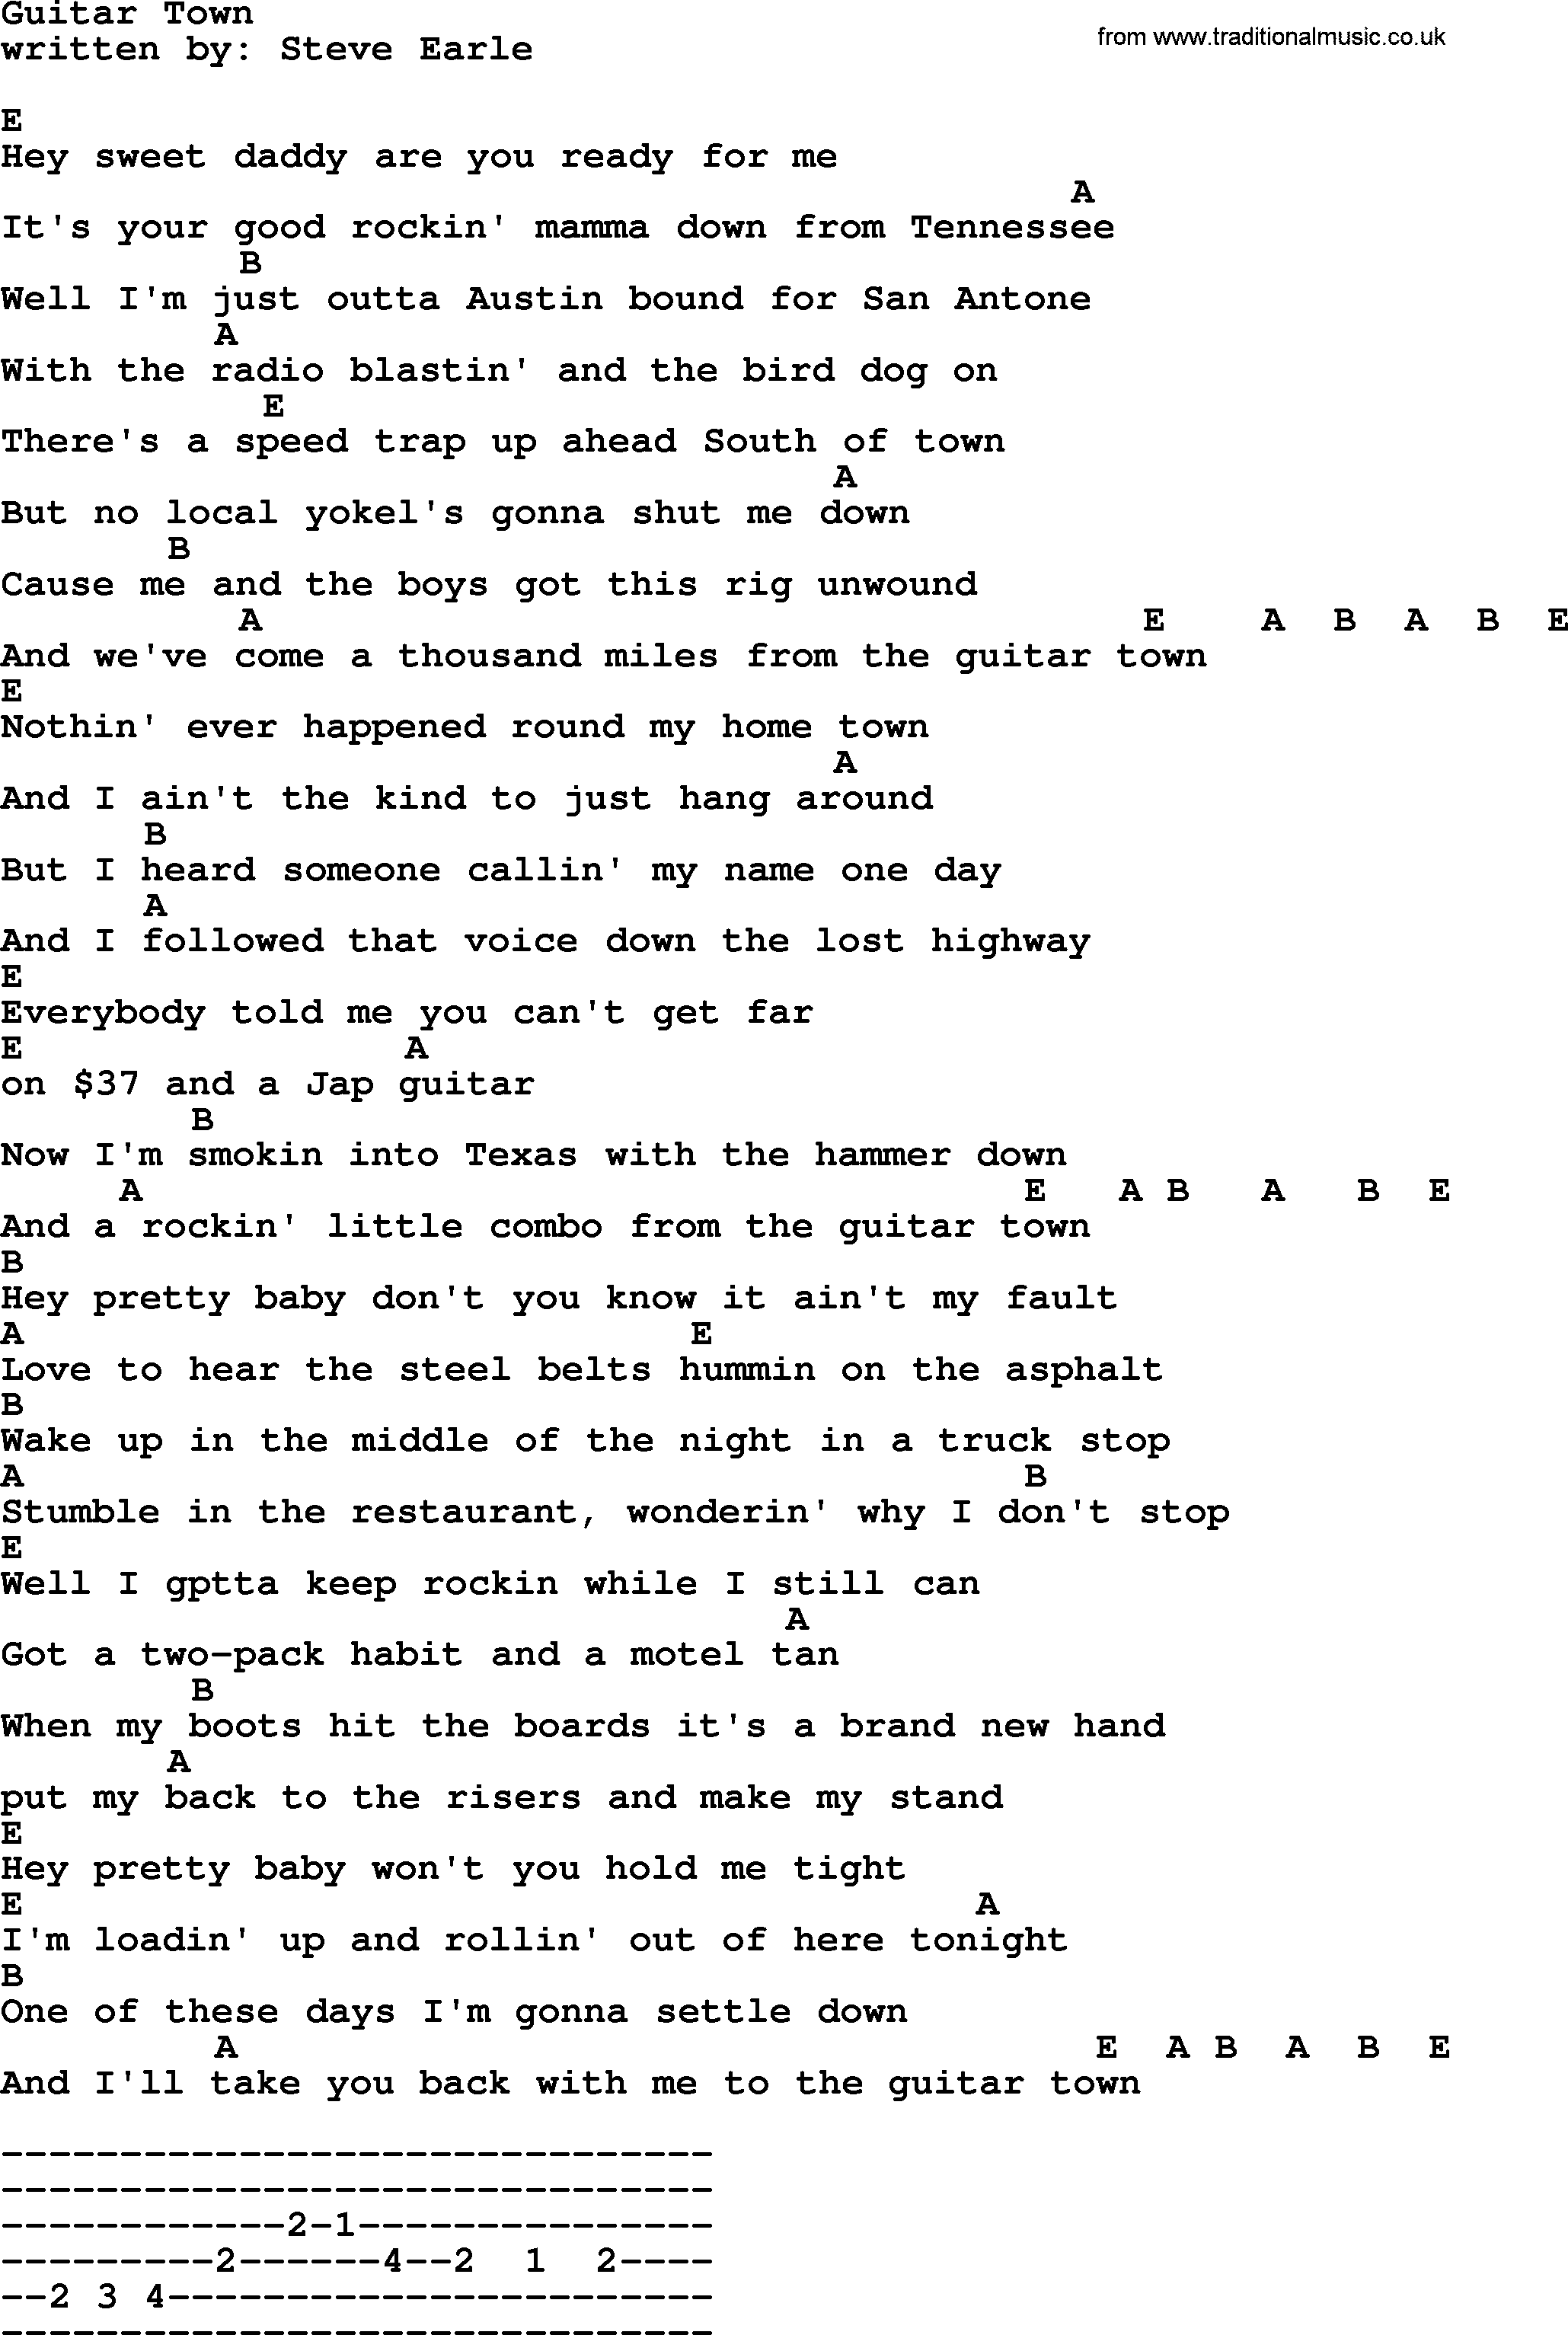 Emmylou Harris song: Guitar Town lyrics and chords